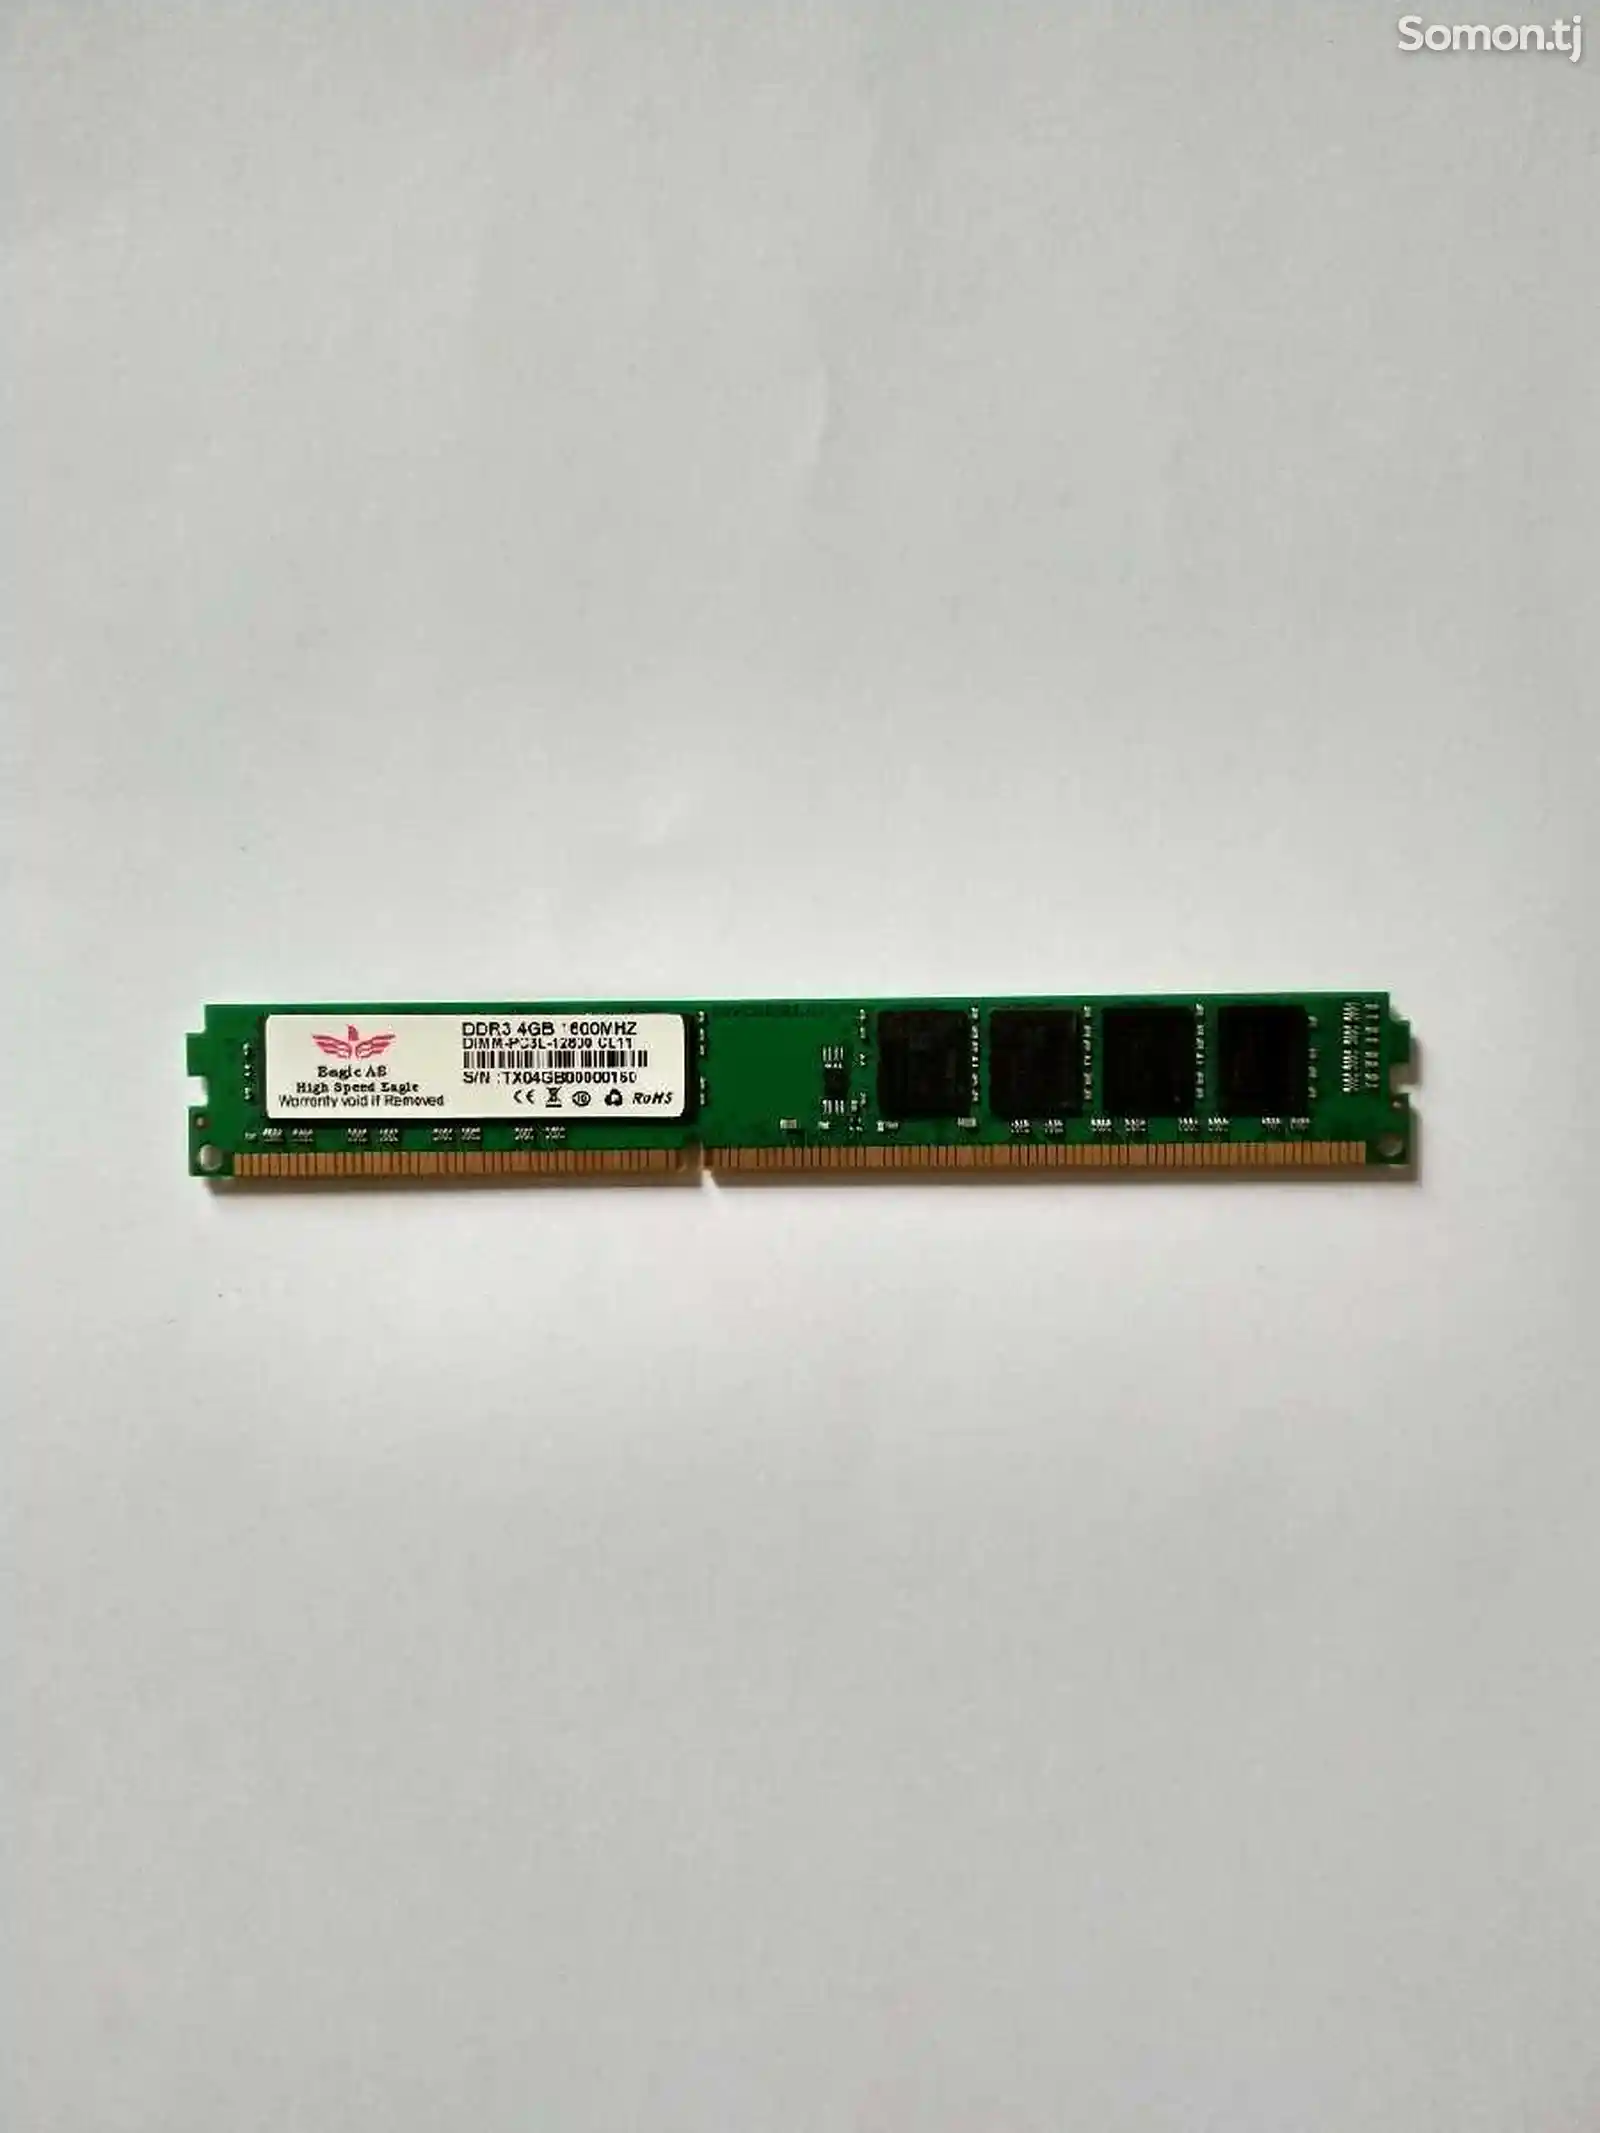 Оперативная память Eagle As DDR3 4GB 1600MHz-3